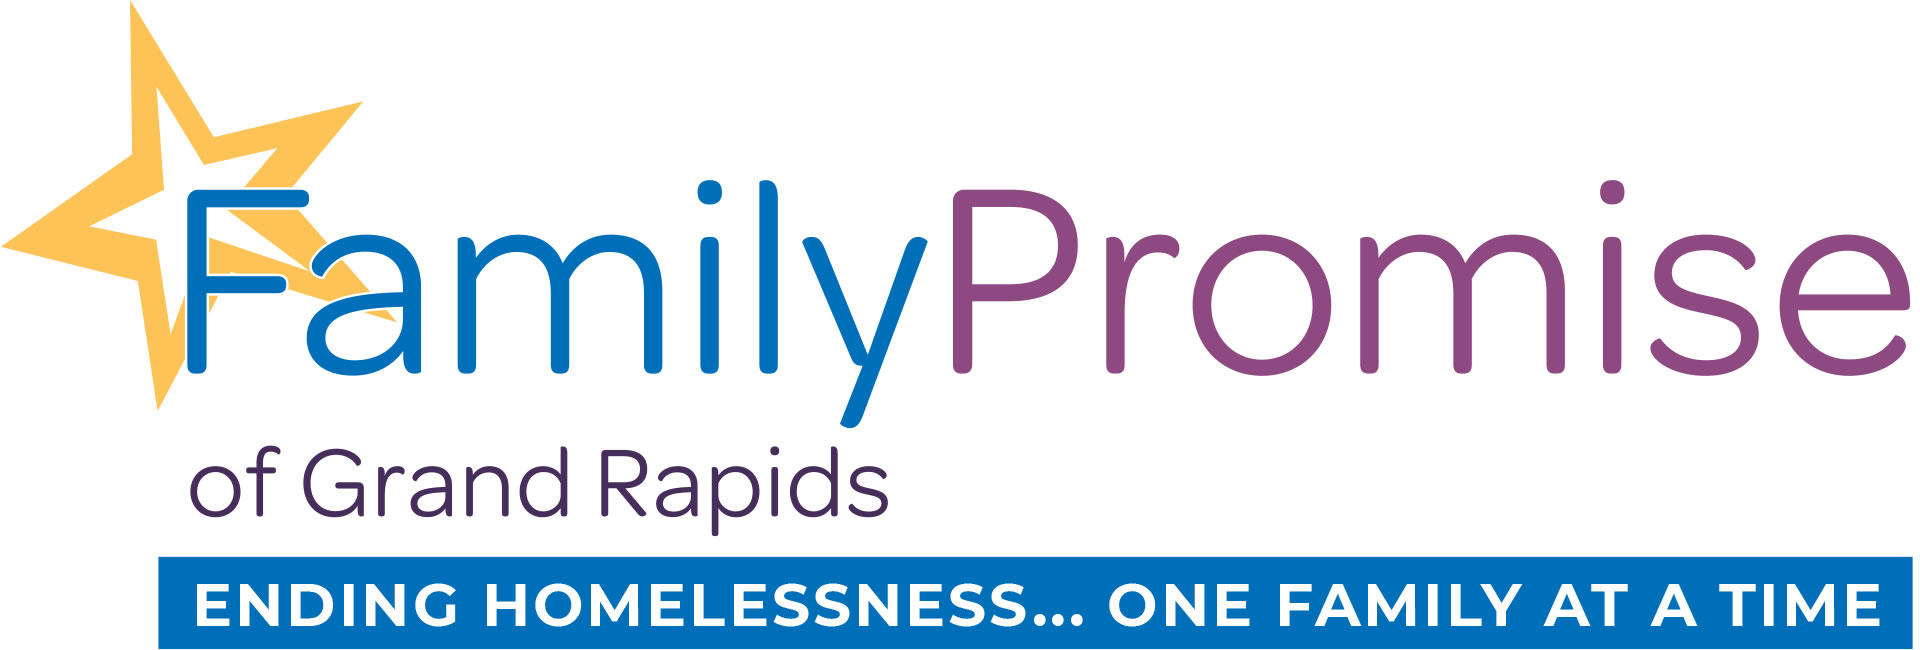 Family Promise of Grand Rapids logo